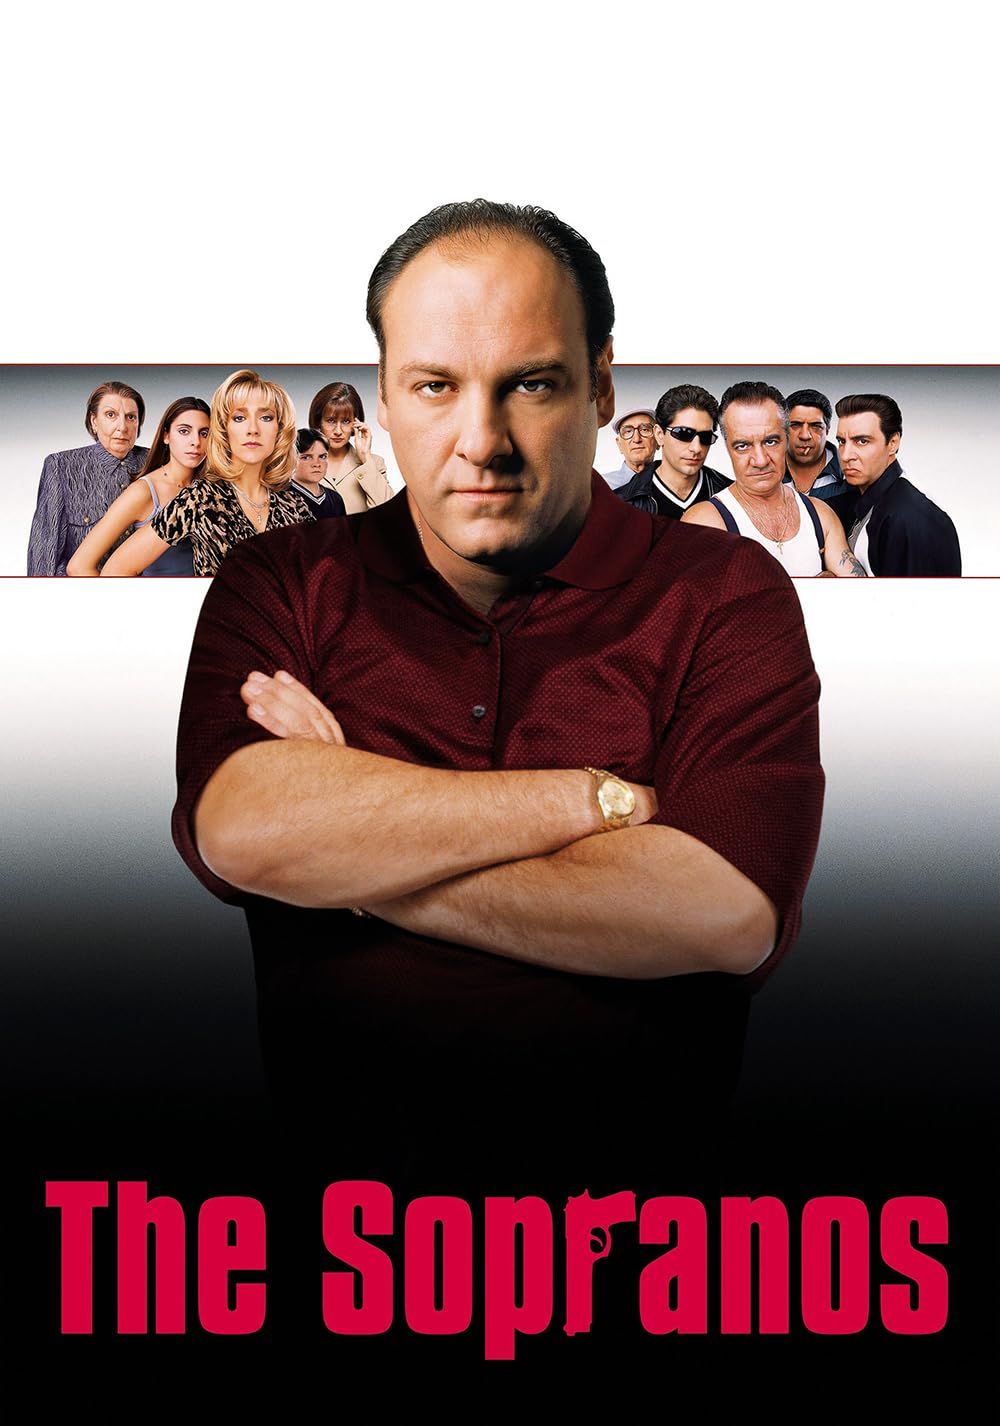 The Sopranos TV Show poster